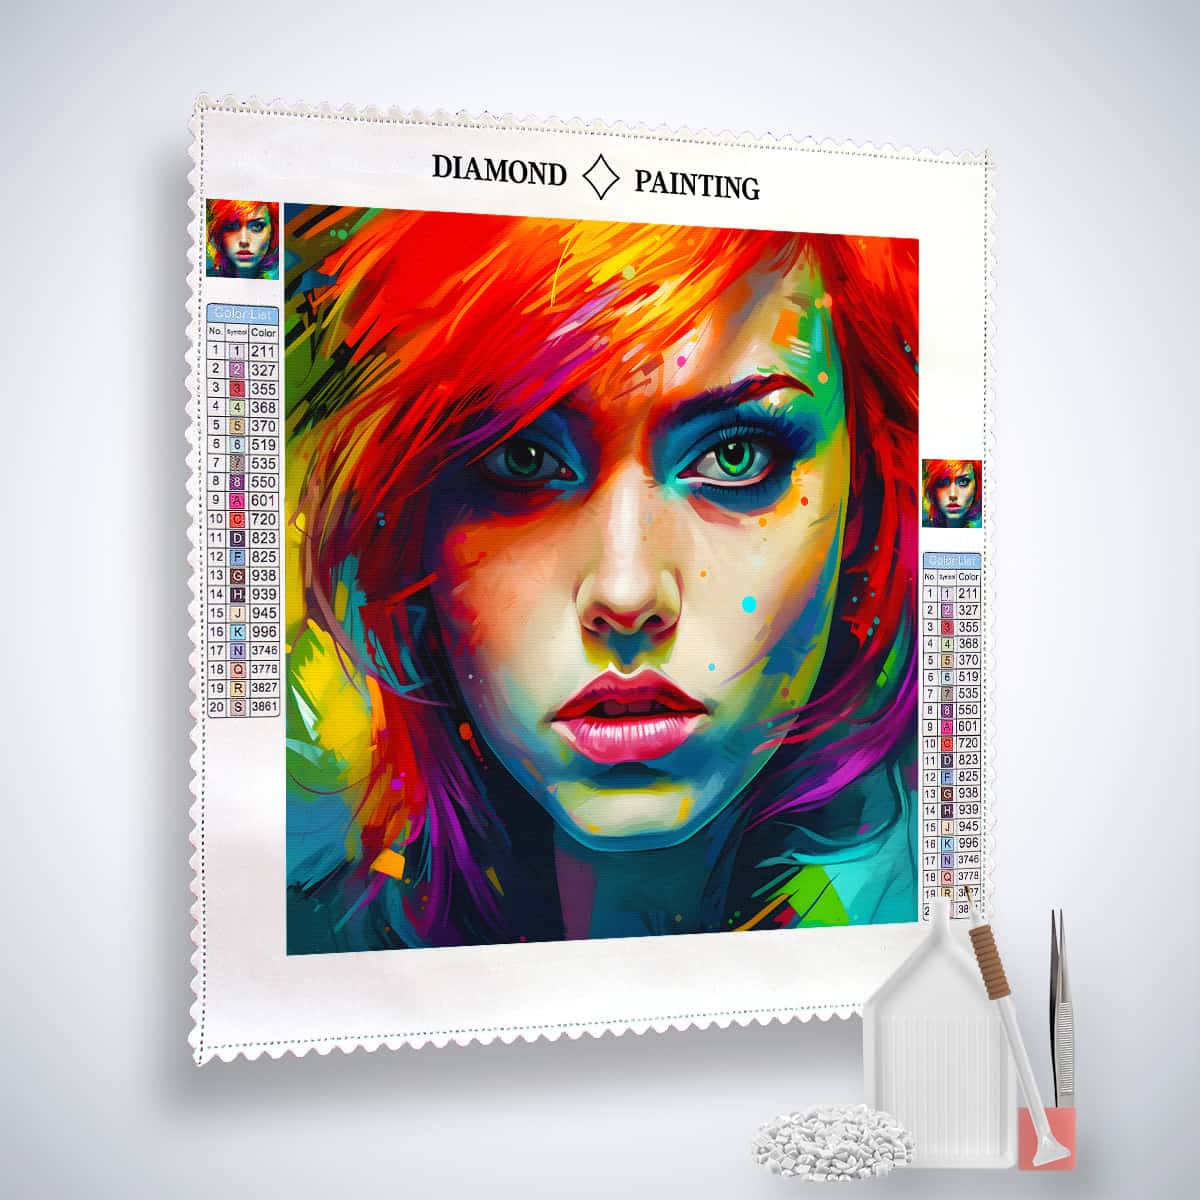 AB Diamond Painting - Portrait Farbexplosion - gedruckt in Ultra-HD - AB Diamond, Frau, Menschen, Neu eingetroffen, Quadratisch